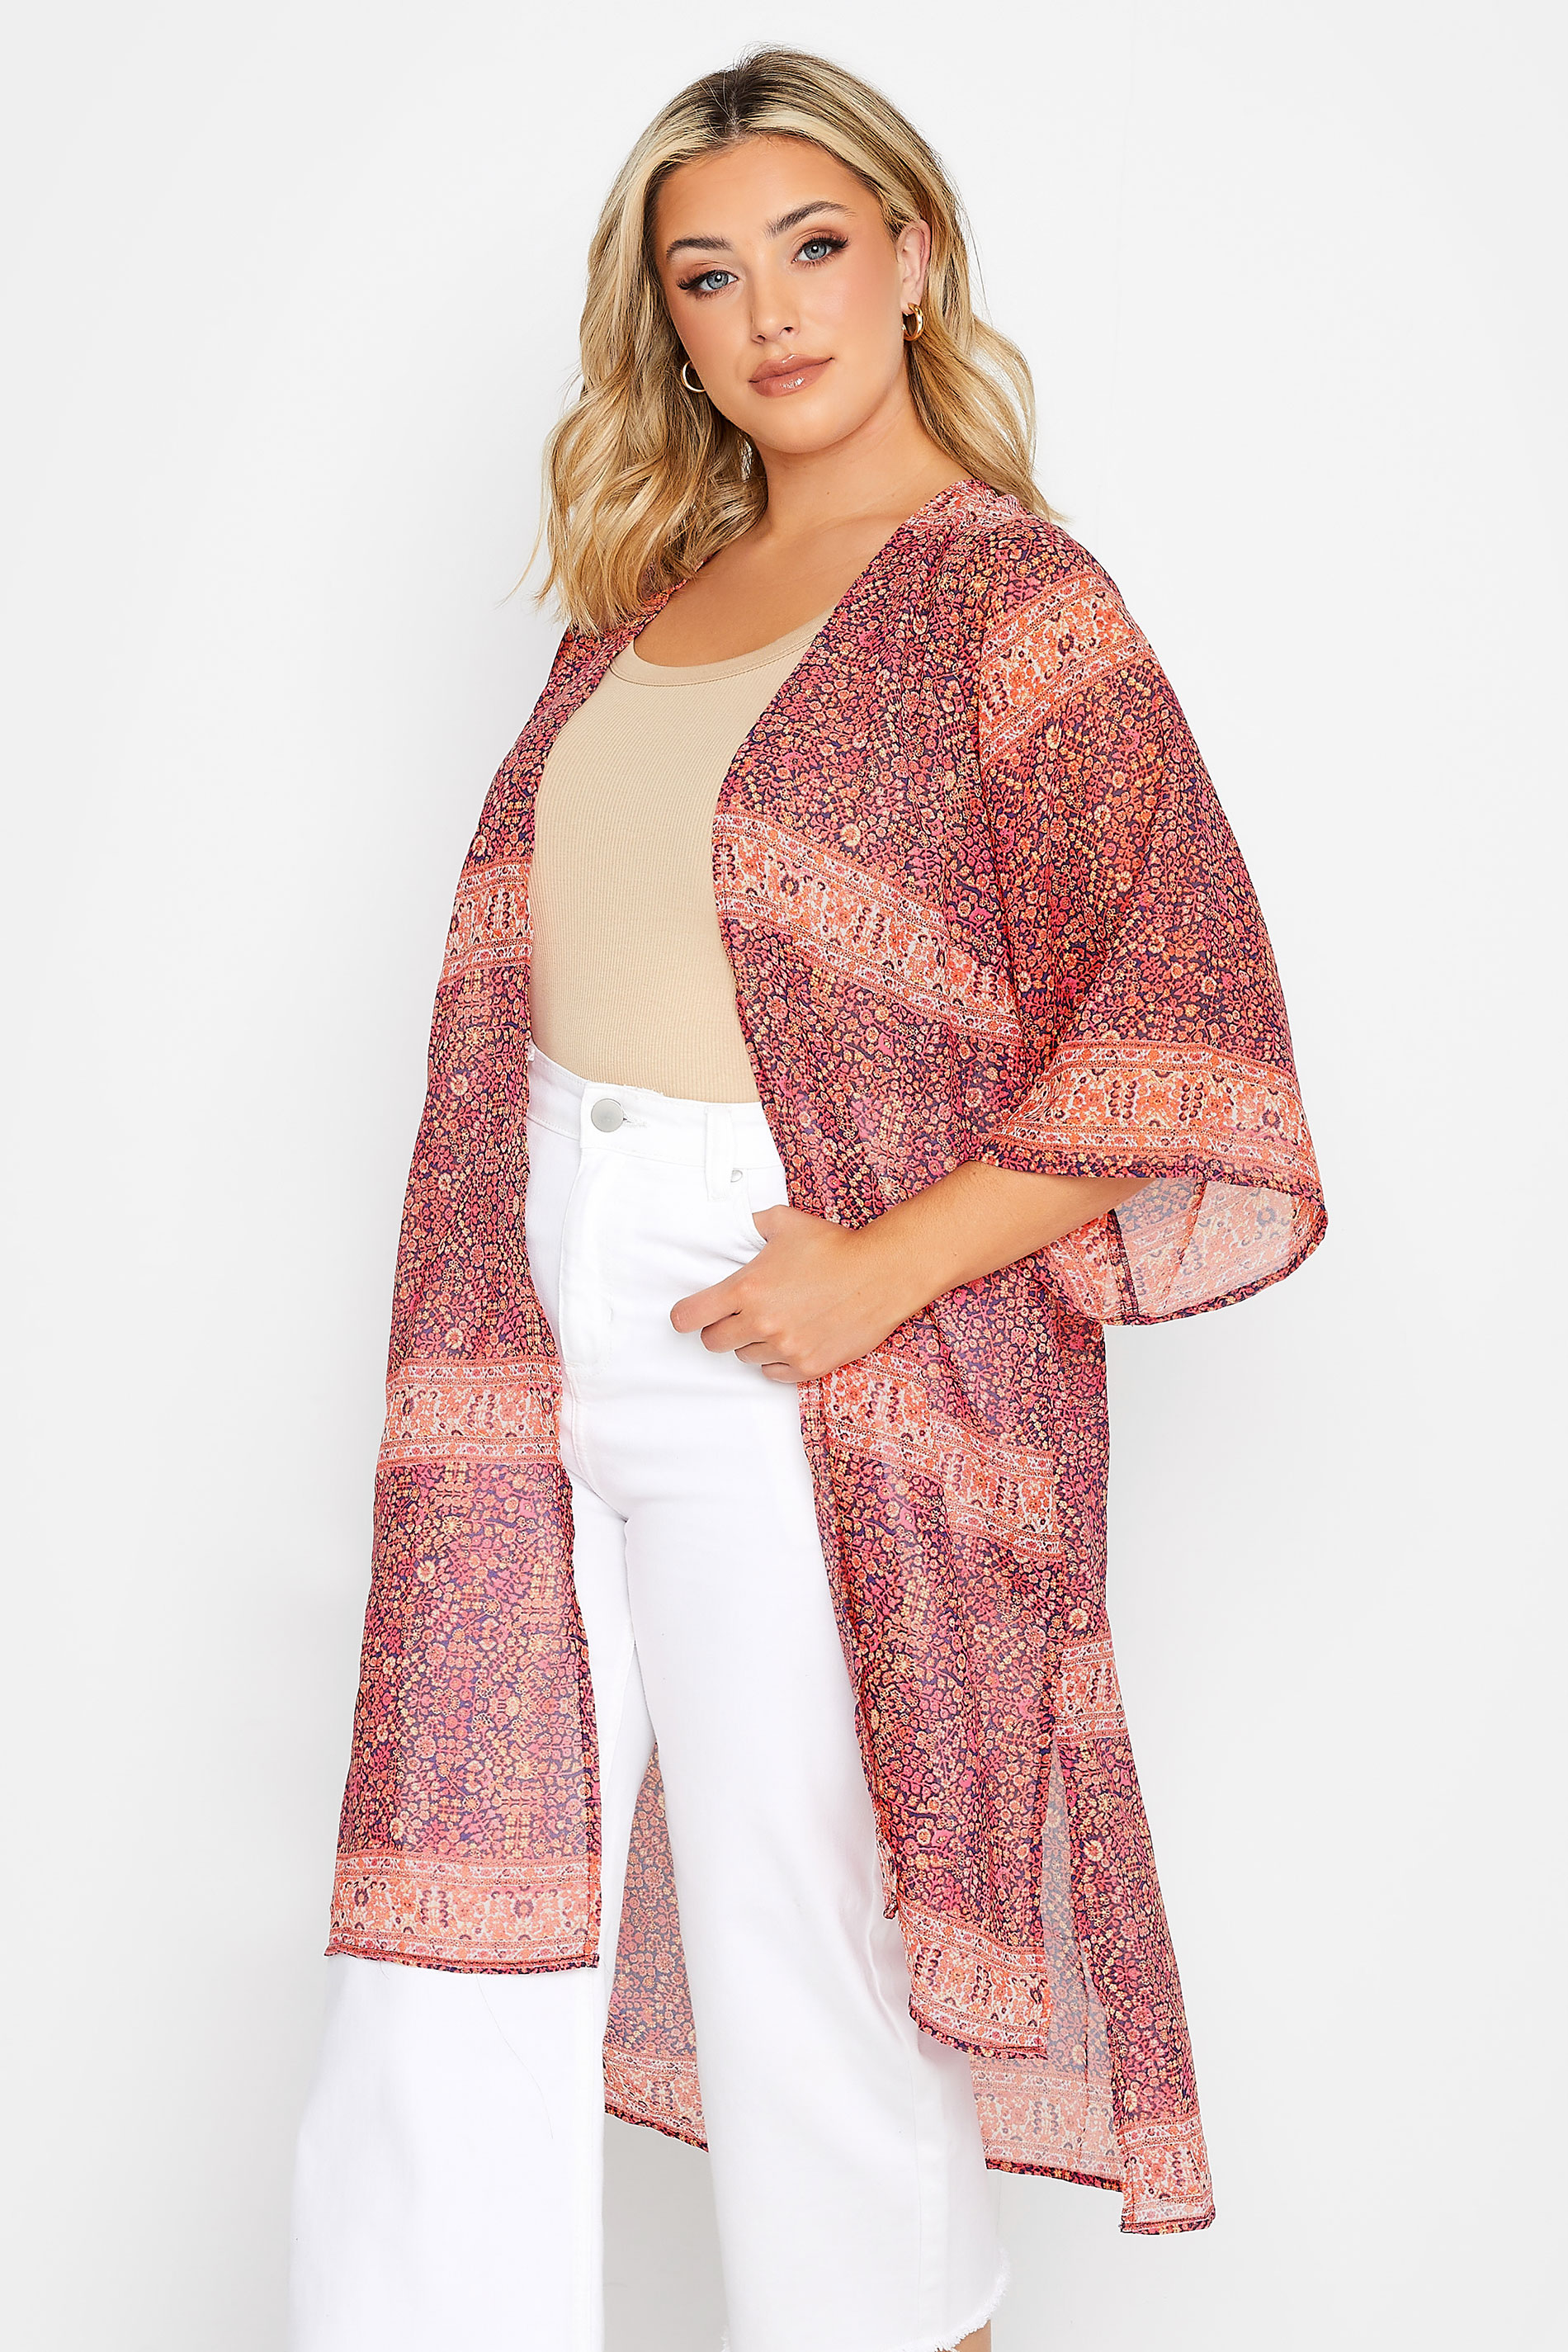 Women Blouse Plus Size Holiday Lace Floral Kimono Cardigan Ladies Summer  Tops | eBay